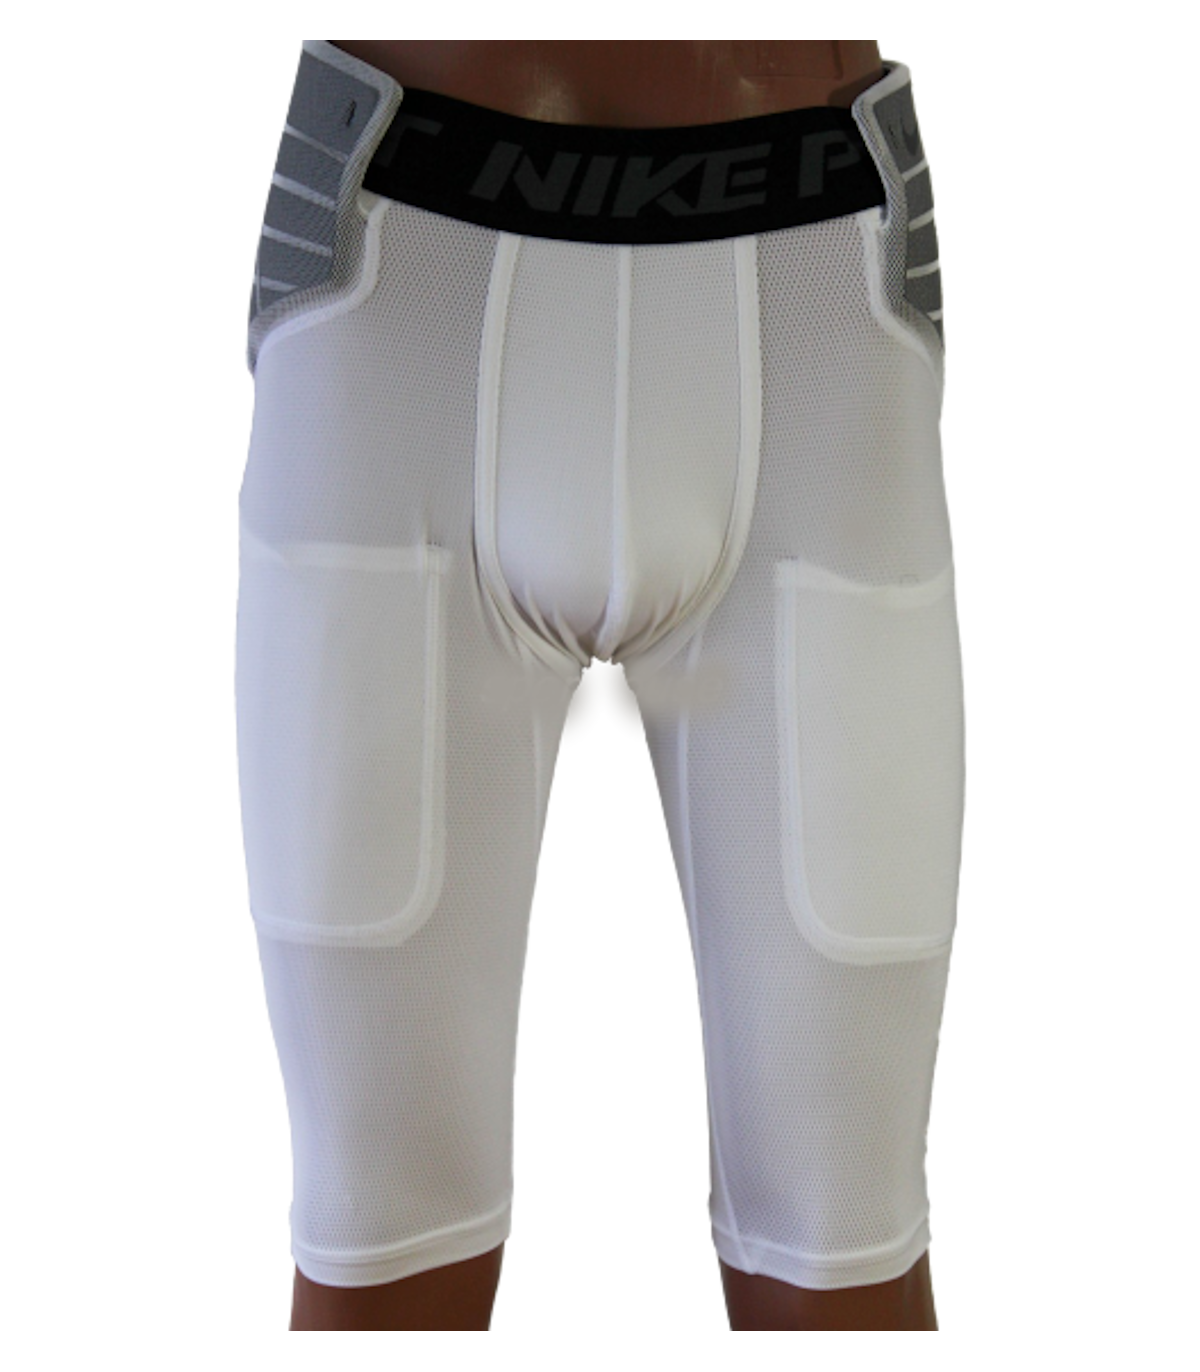 nike pro combat compression shorts